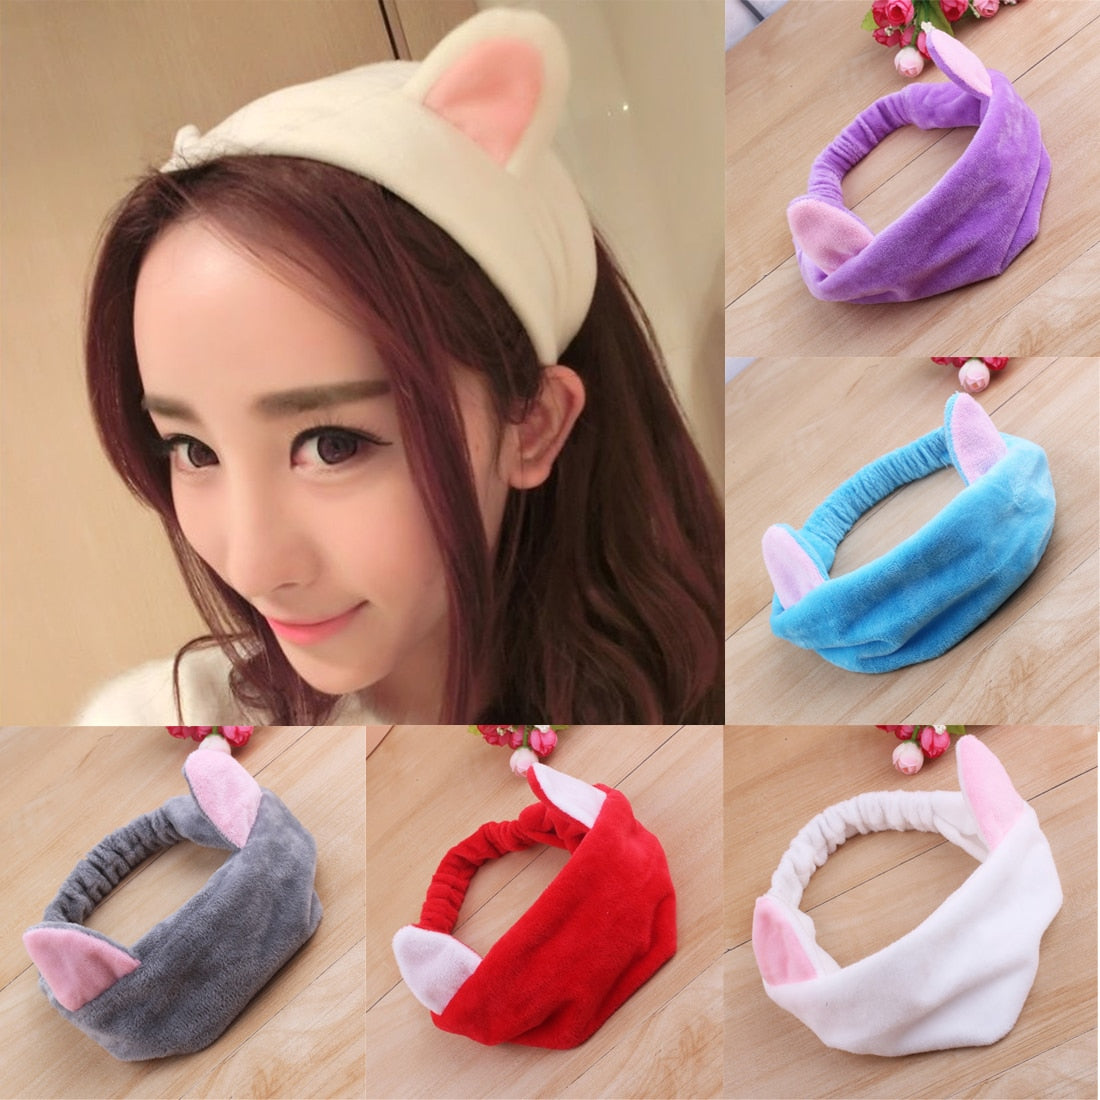 Kawaii Cat Headbands in Multiplle Color Options